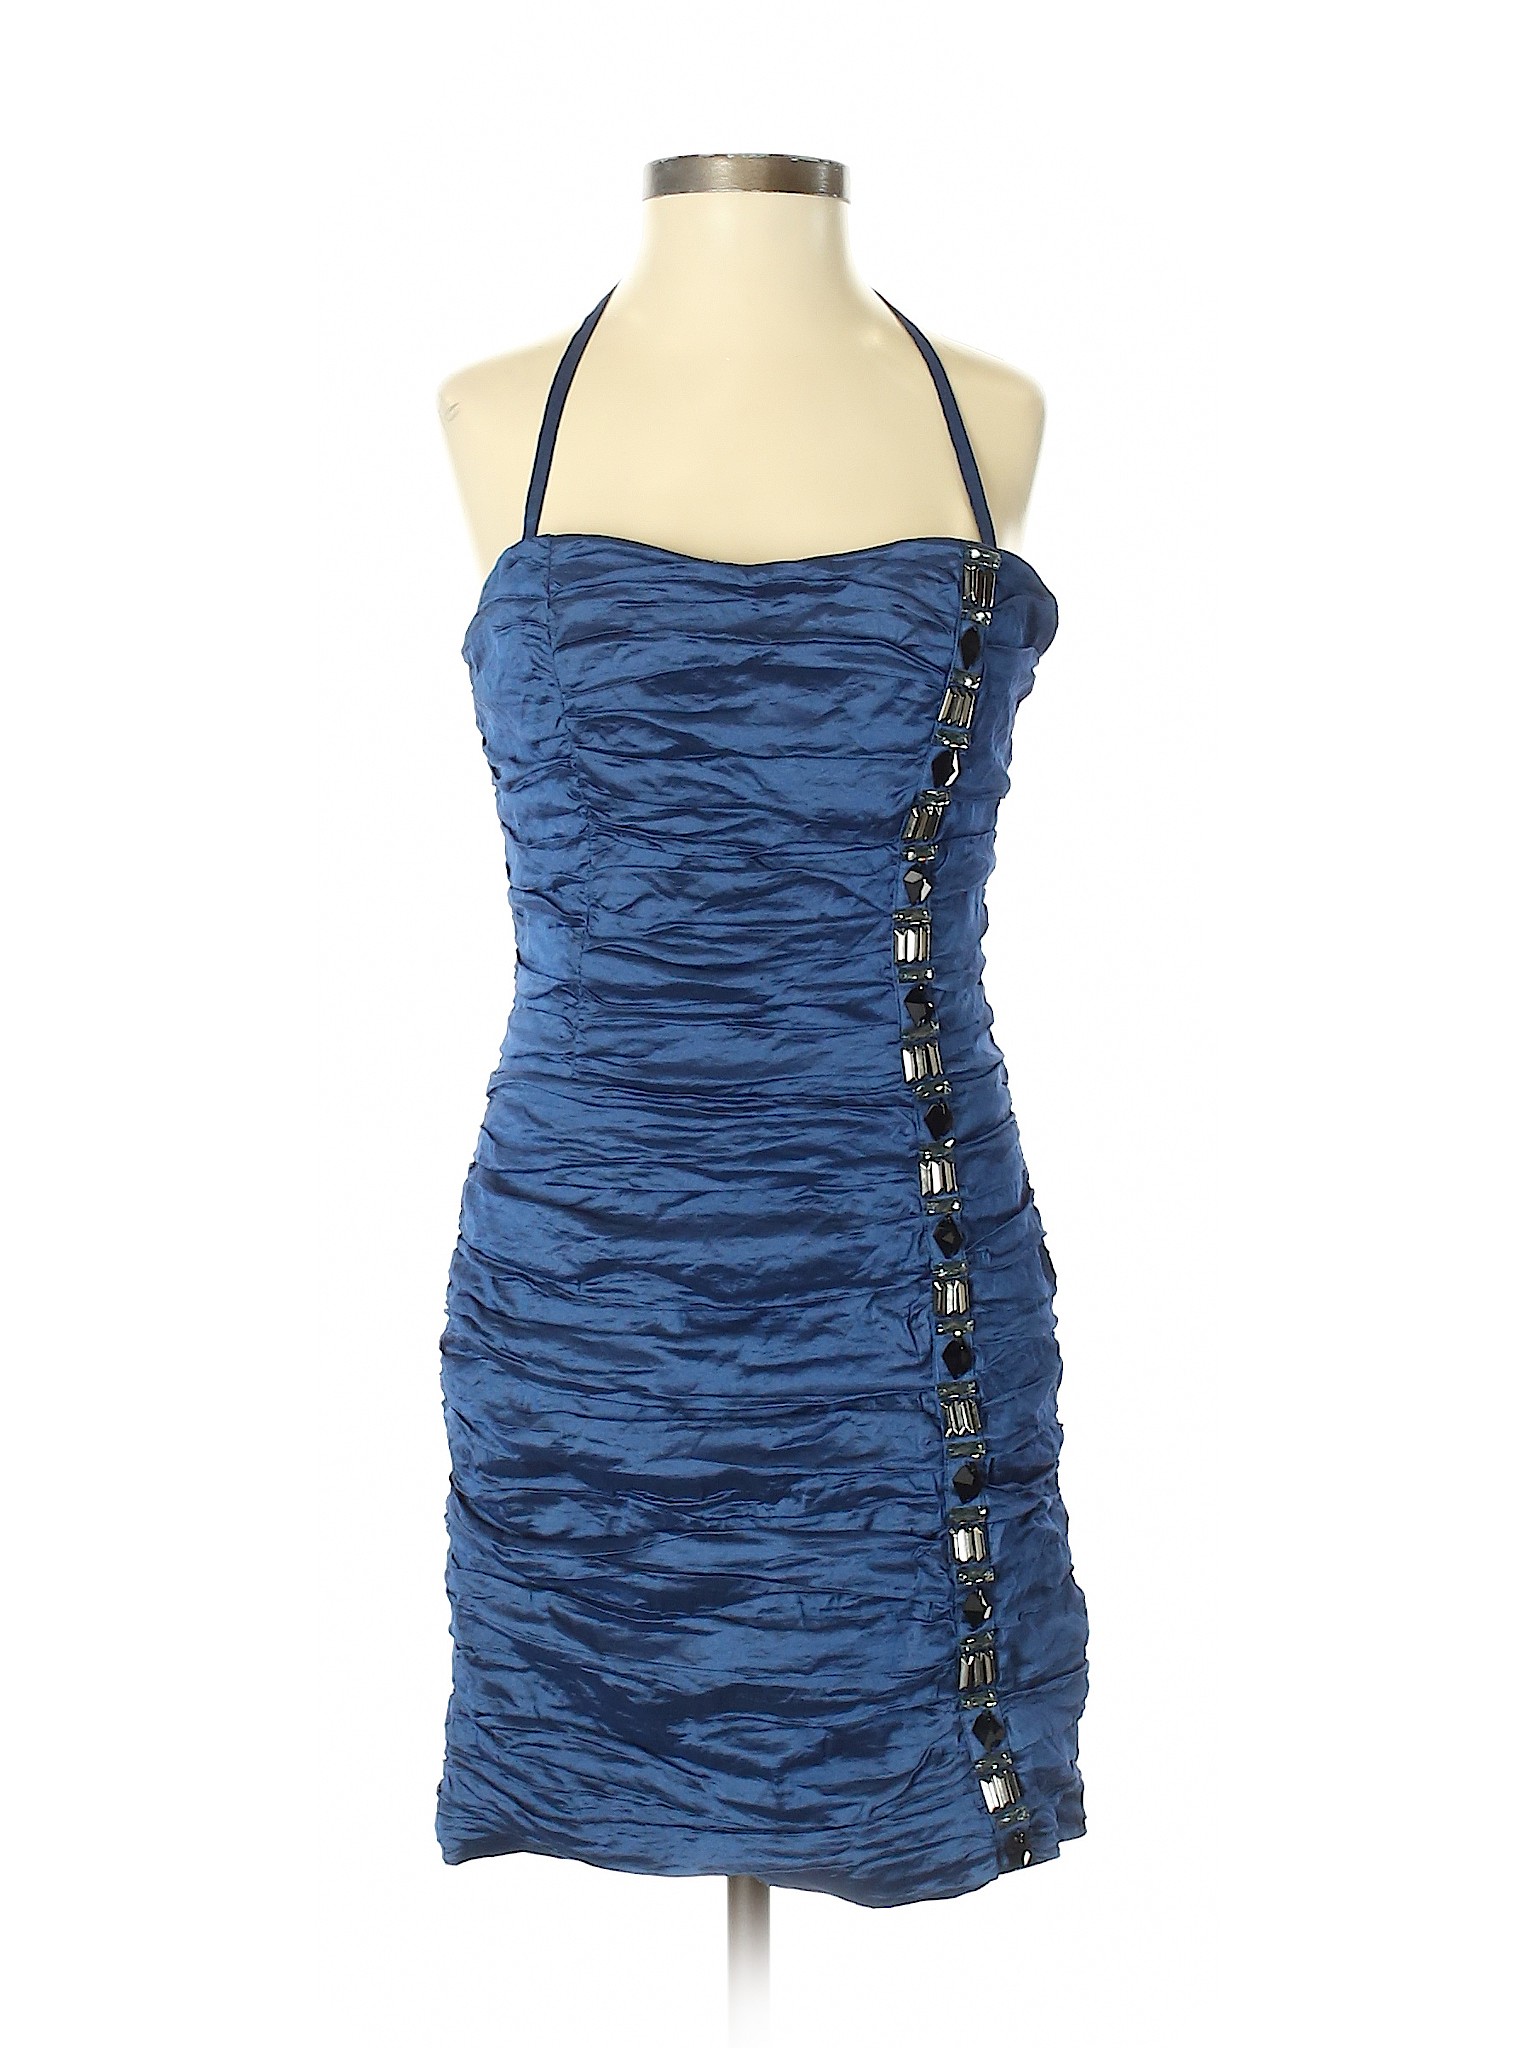 Bebe Women Blue Cocktail Dress Sm | eBay